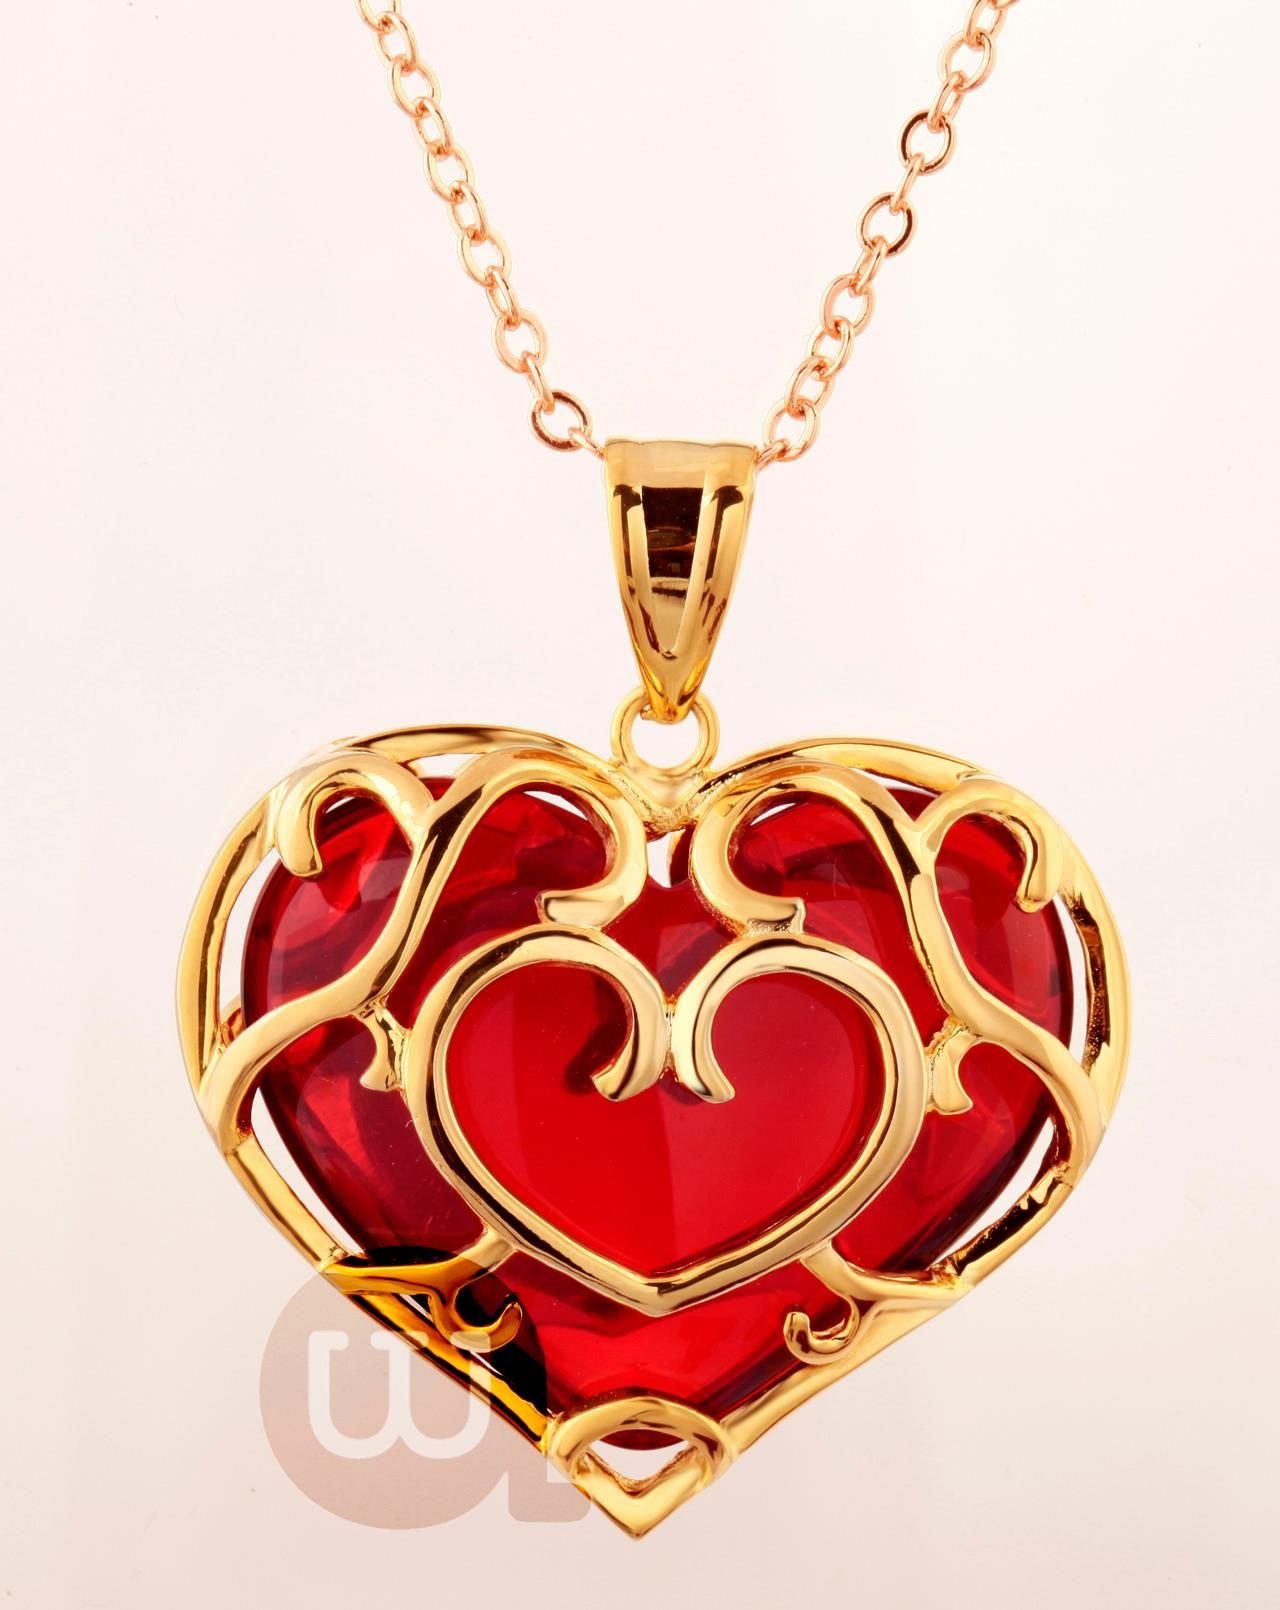 Сердечко из золота. Кулон сердце. Подвеска в виде сердца. Кулон сердечко. Золотой кулон сердце.